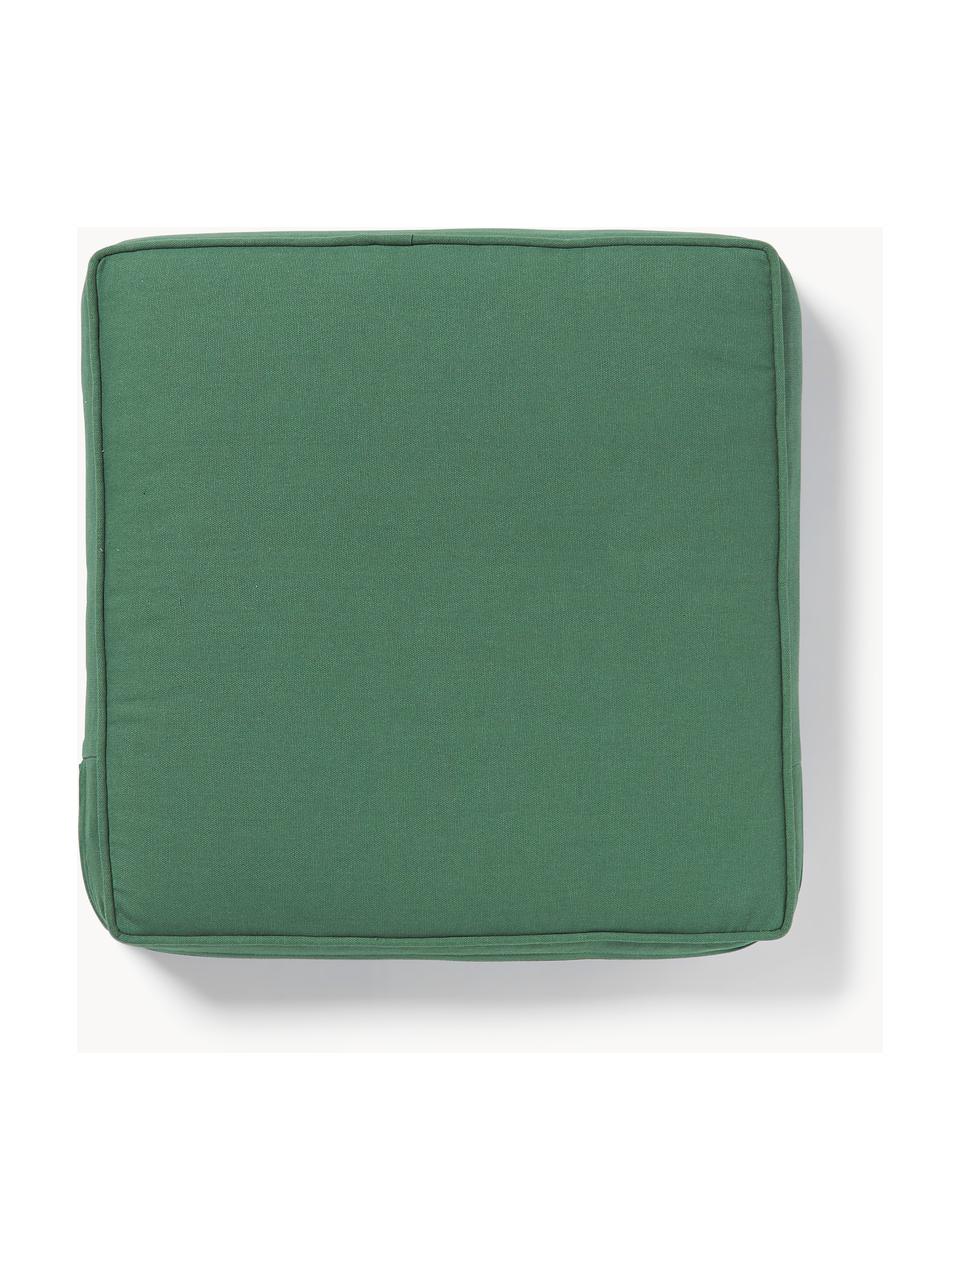 Cuscino sedia alto Zoey, Rivestimento: 100% cotone, Verde scuro, Larg. 40 x Lung. 40 cm